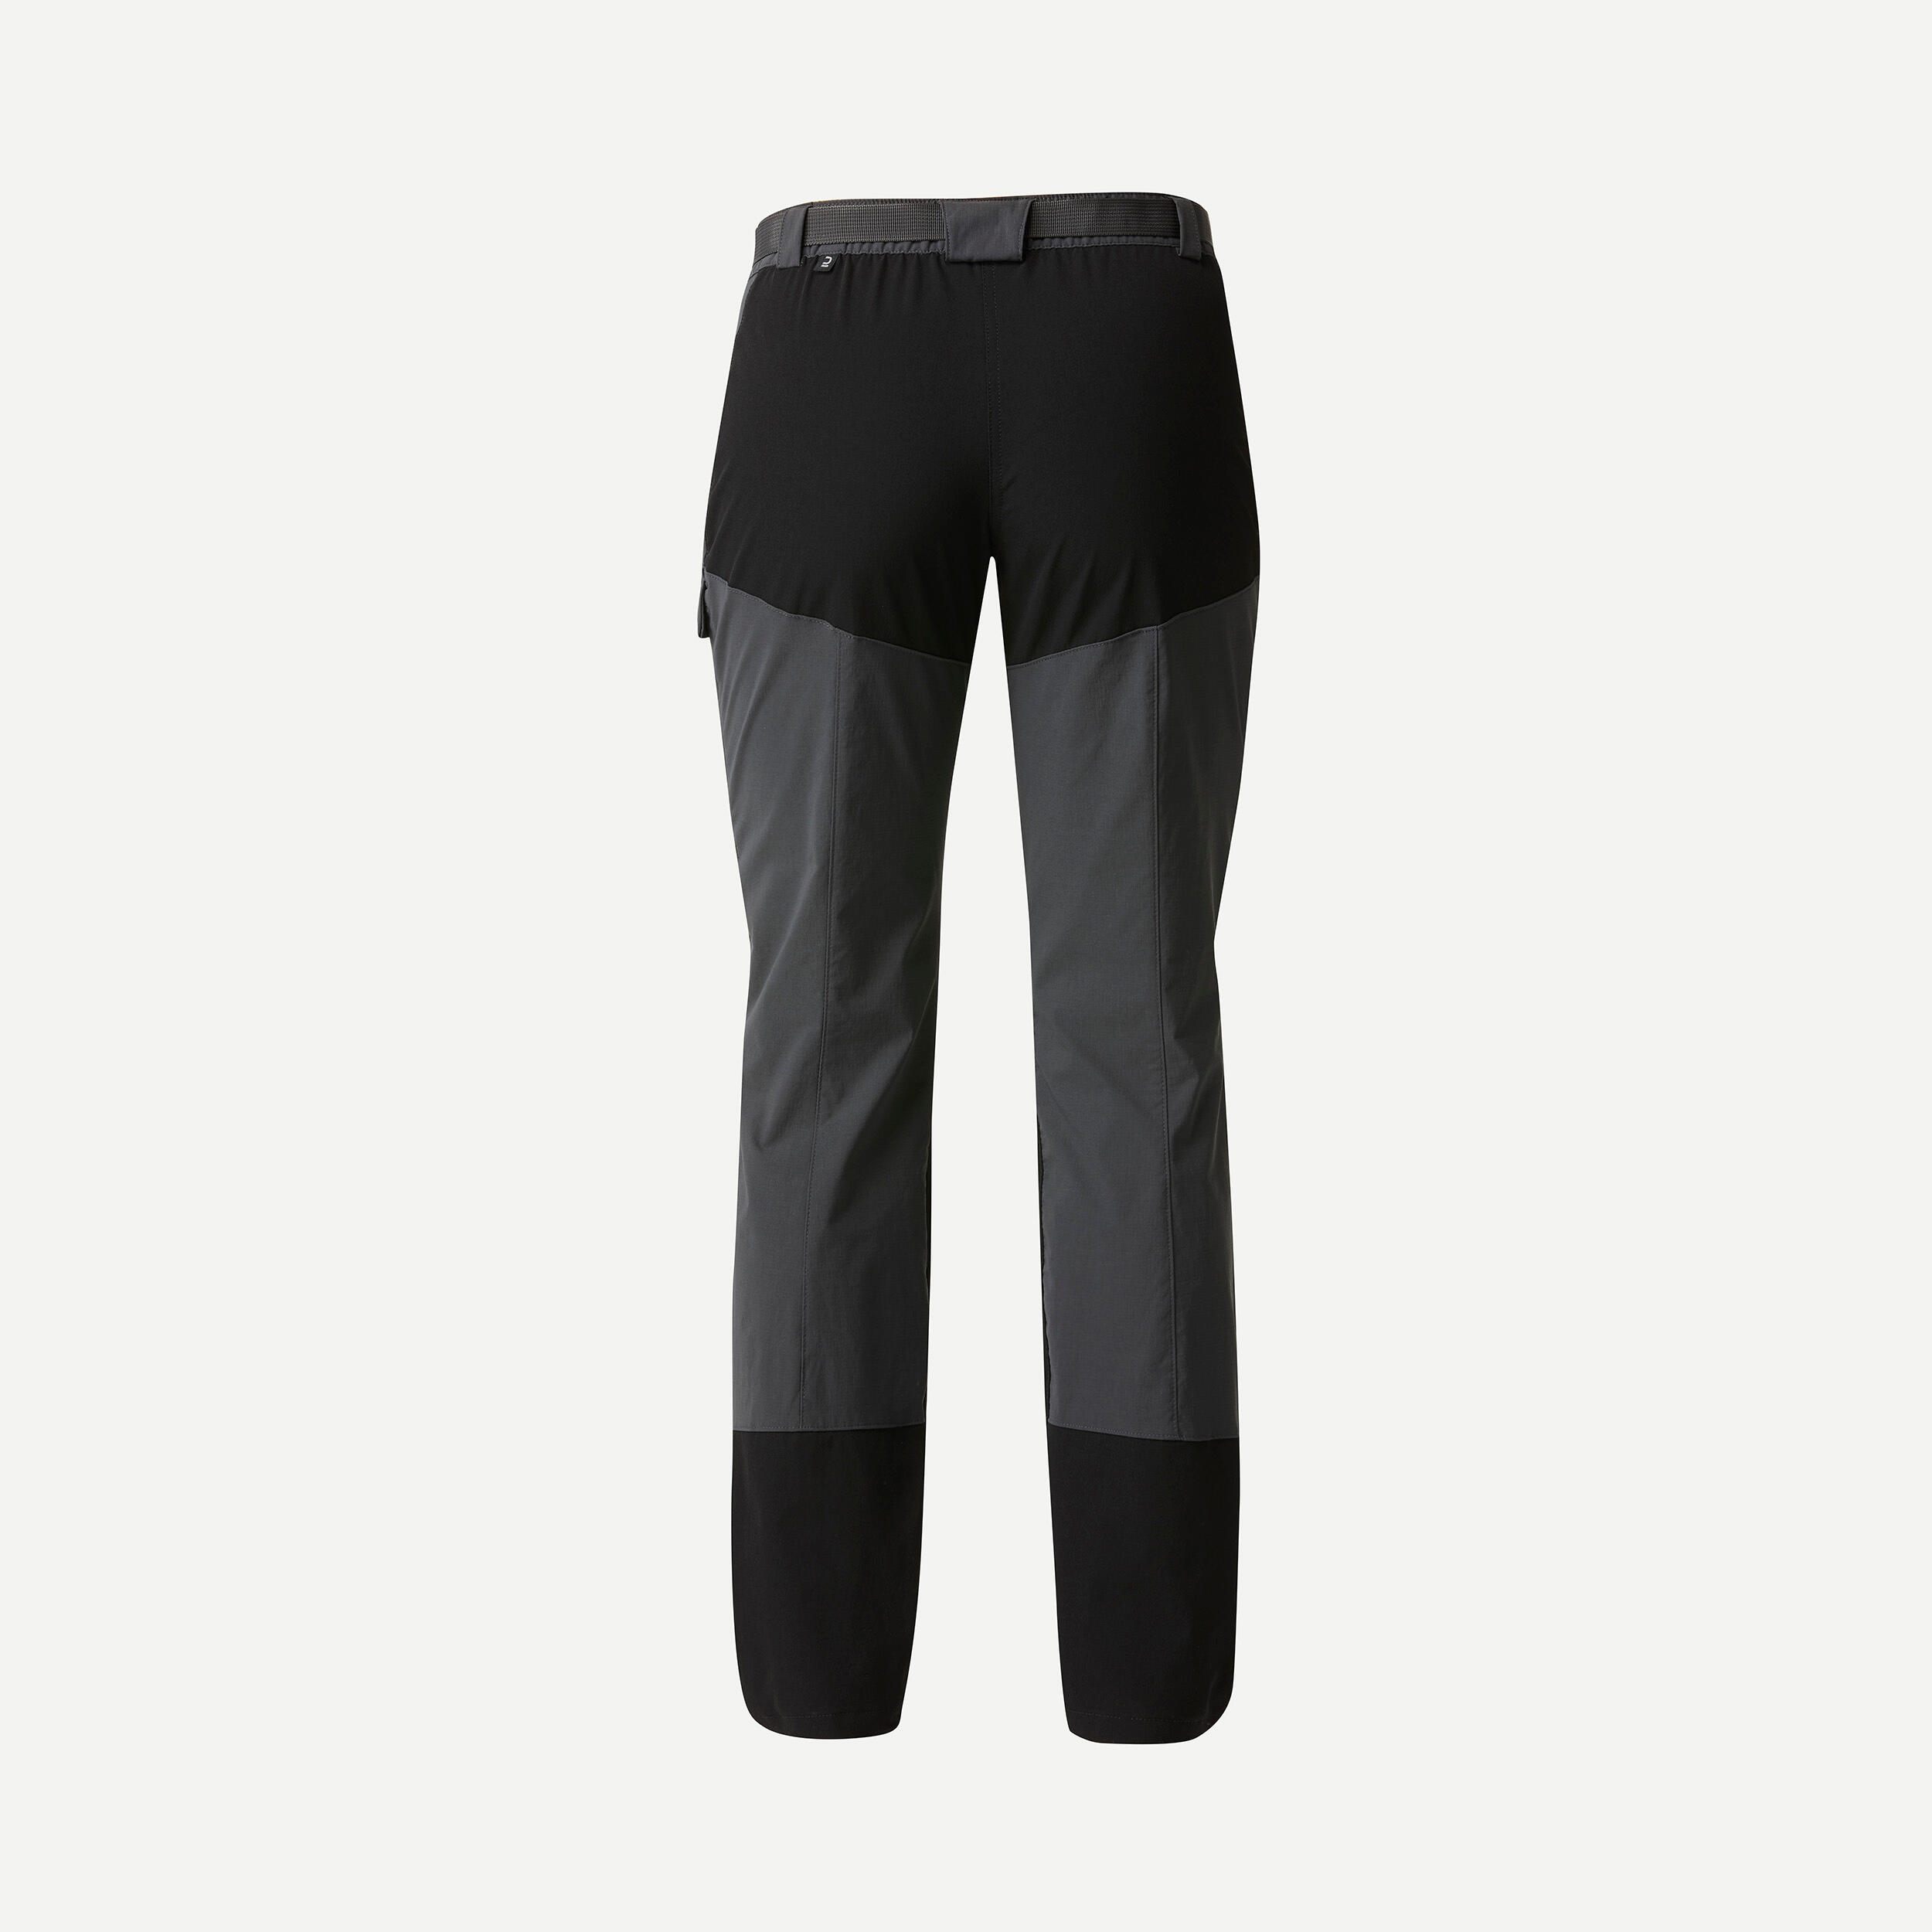 Women's Hiking Pants - MT 500 Grey - FORCLAZ